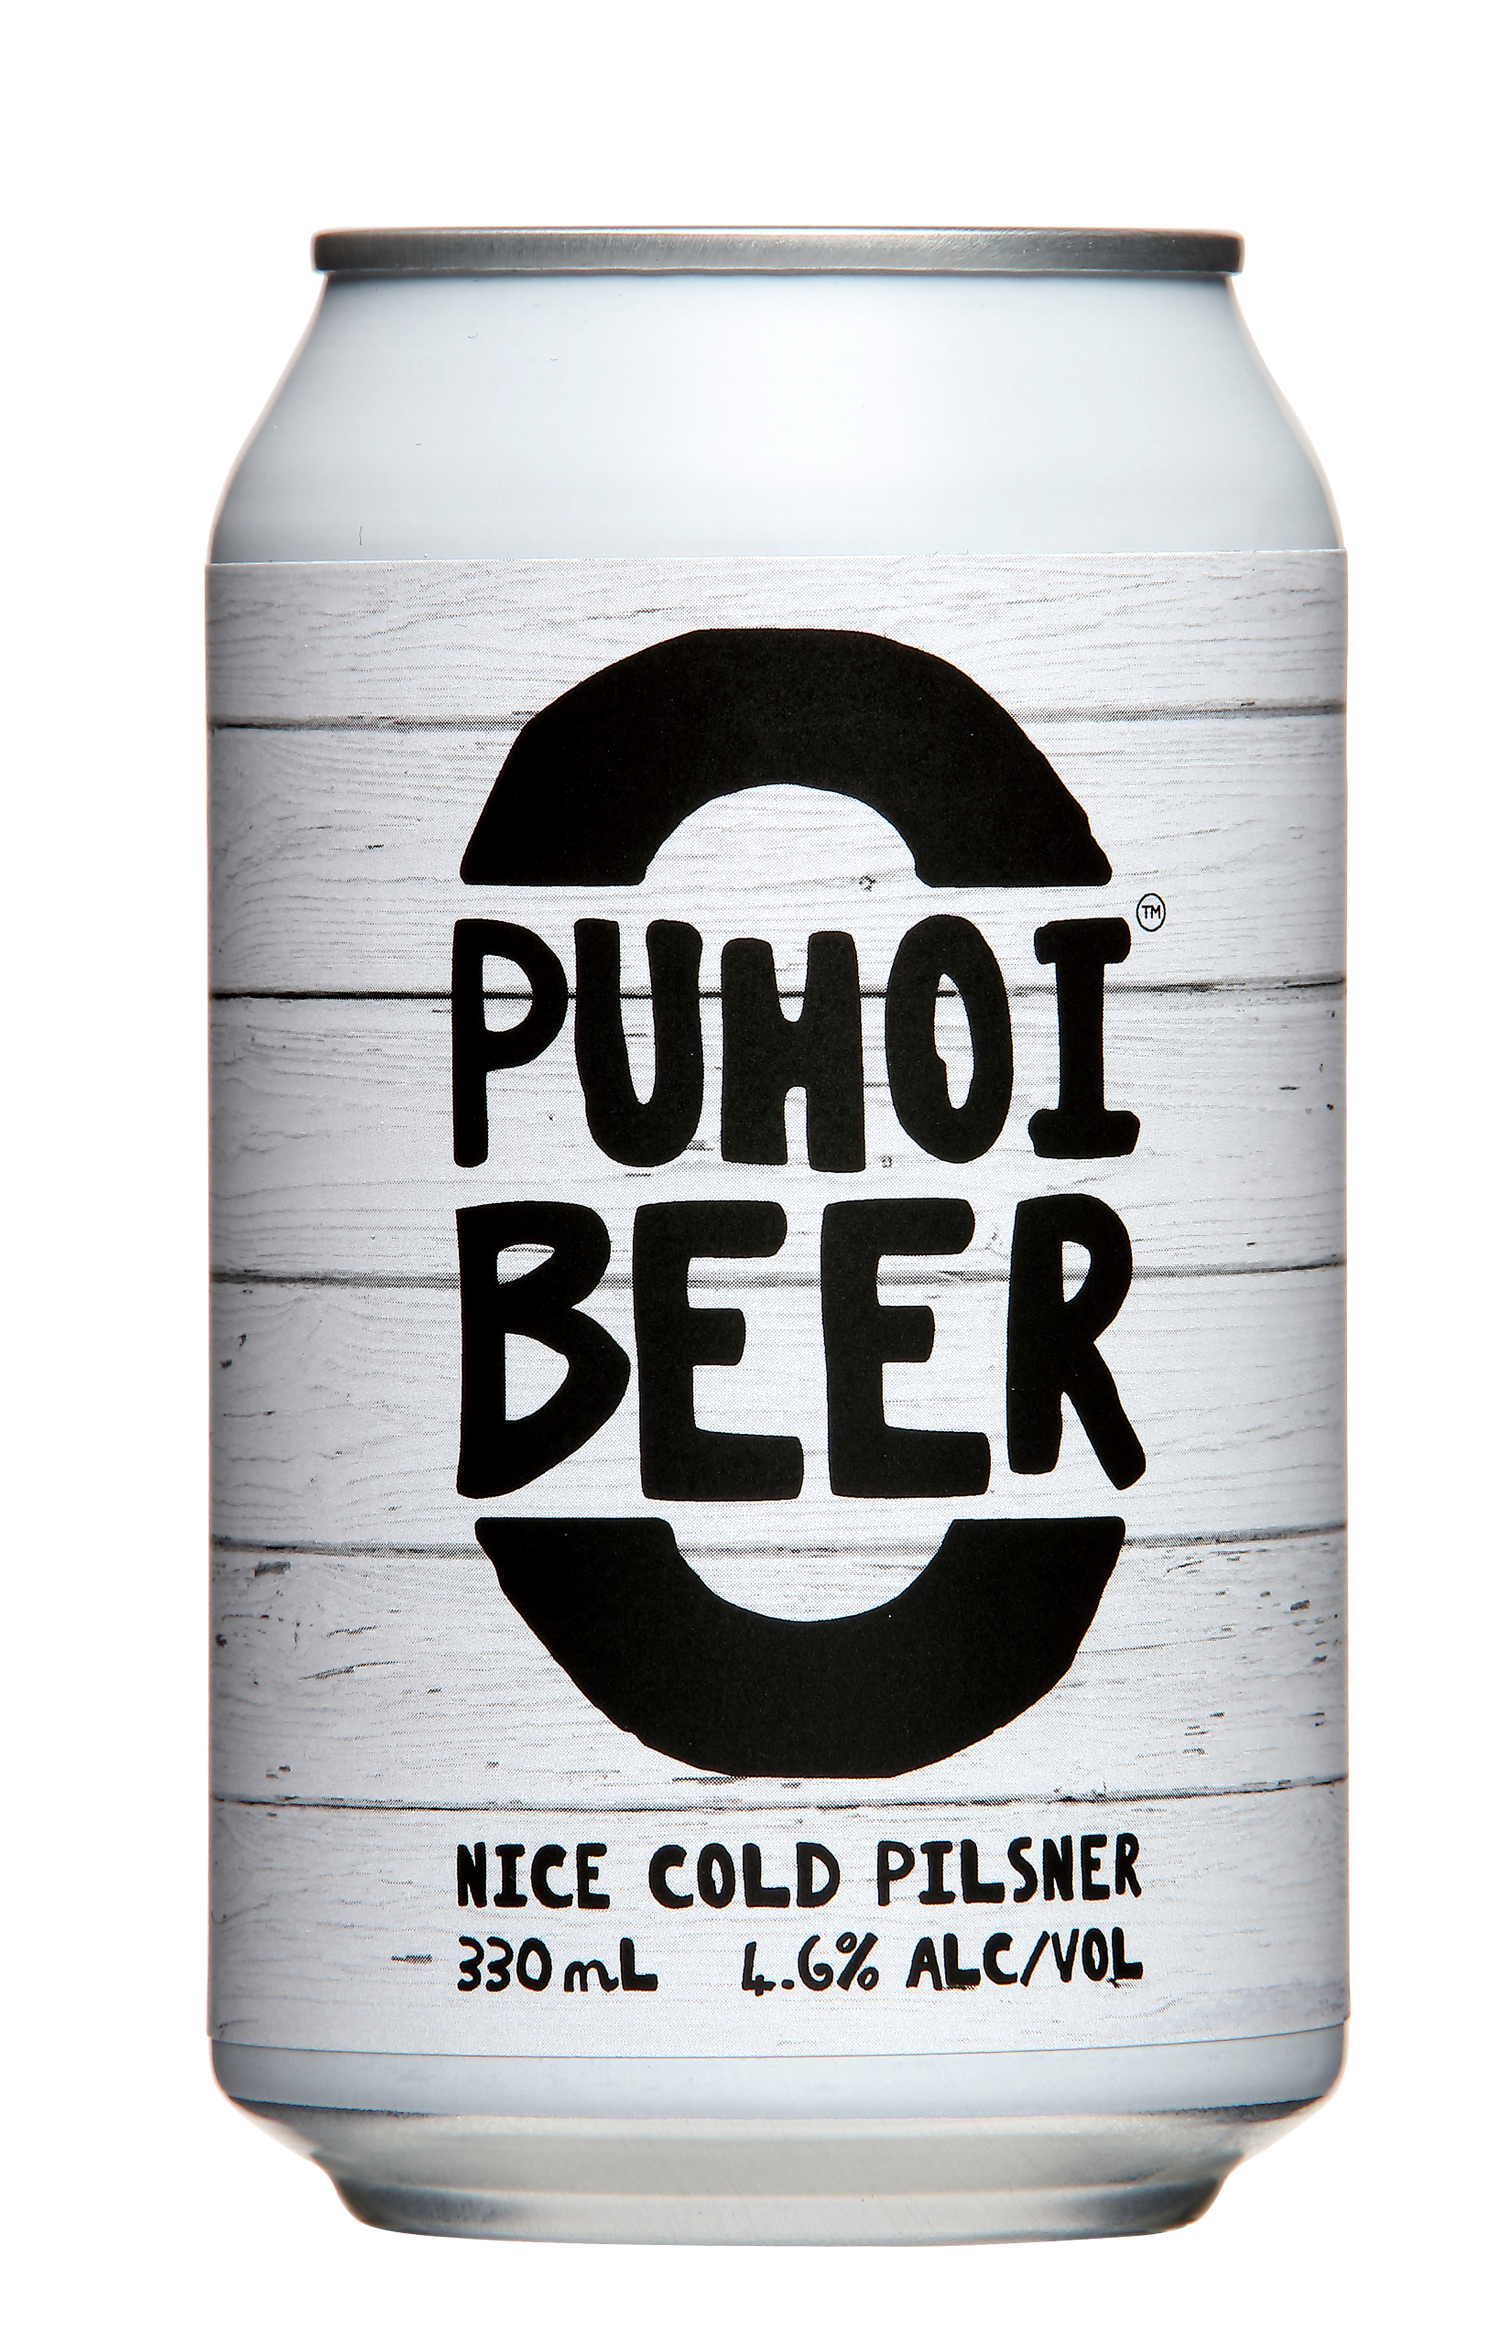 Nice cold puhoi beer.  Award winning craft beer nz